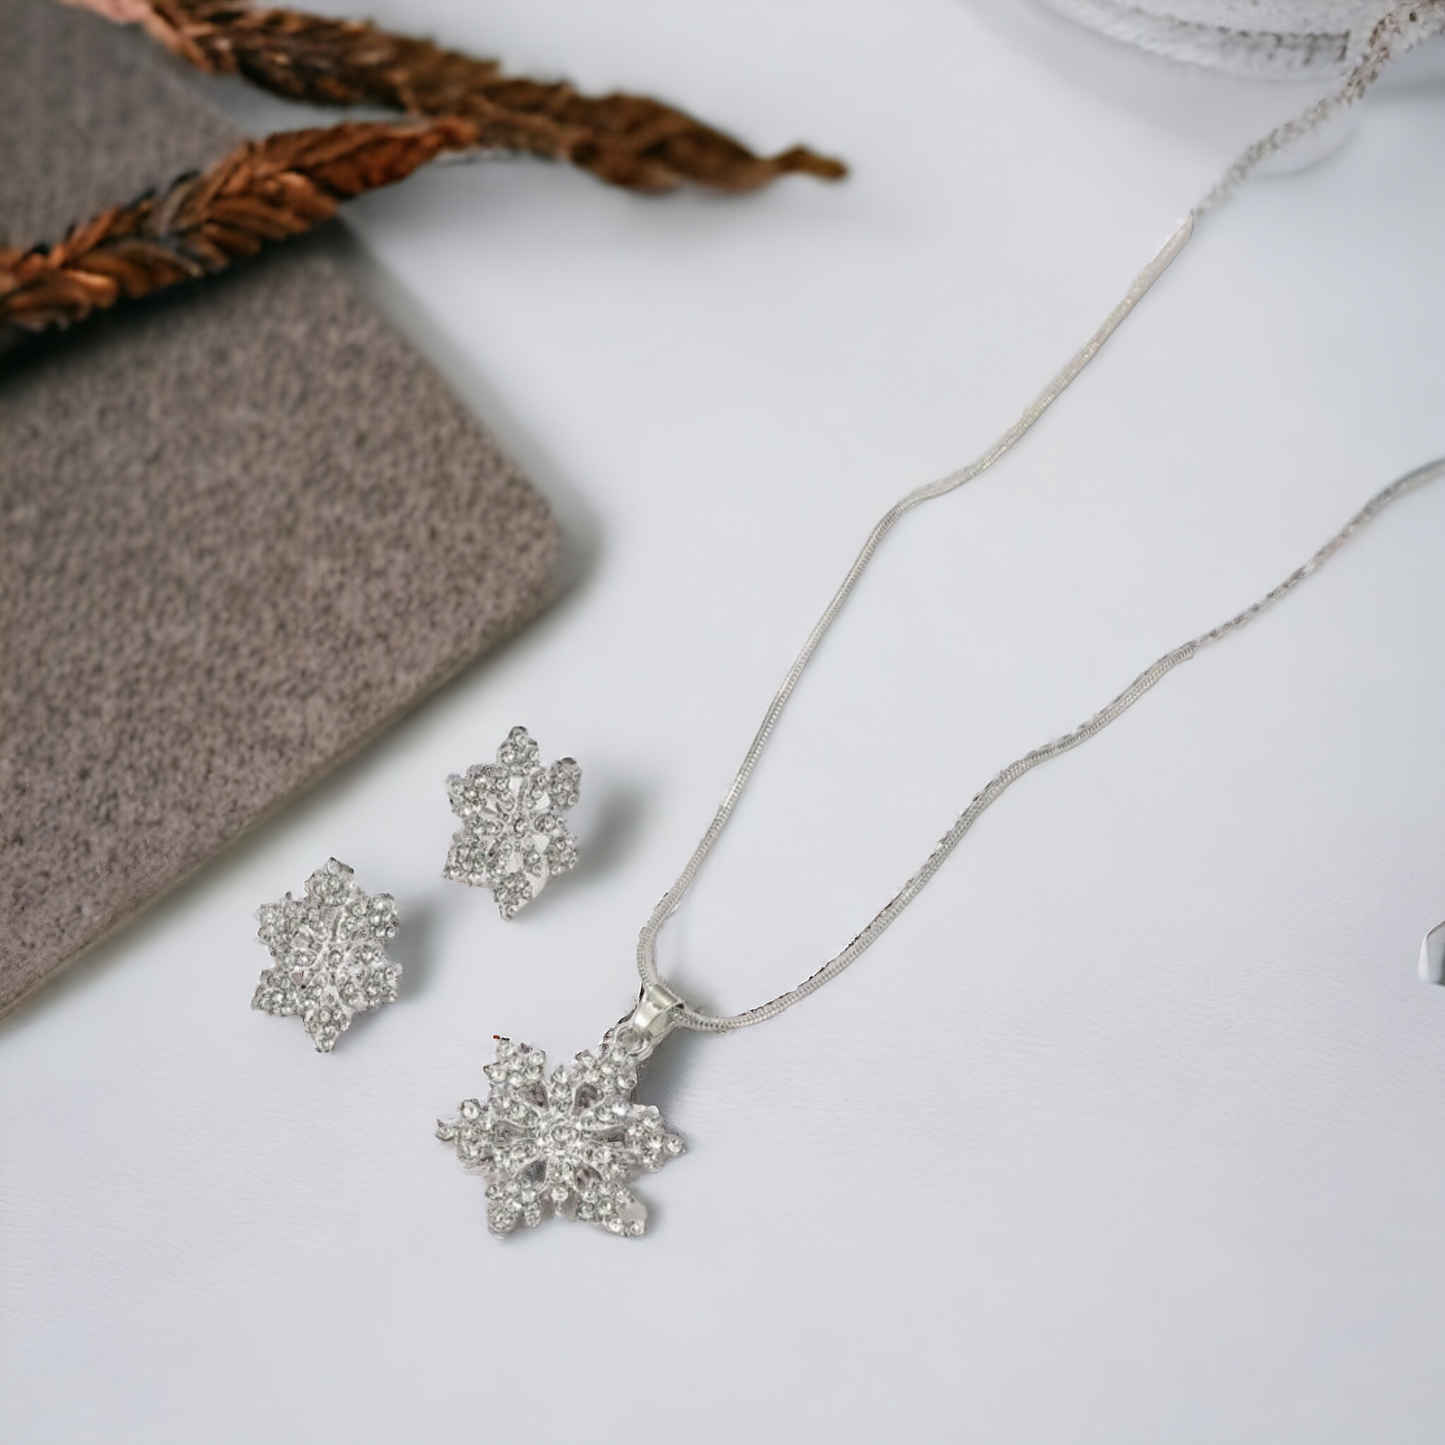 It's a white Christmas snowflake necklace set